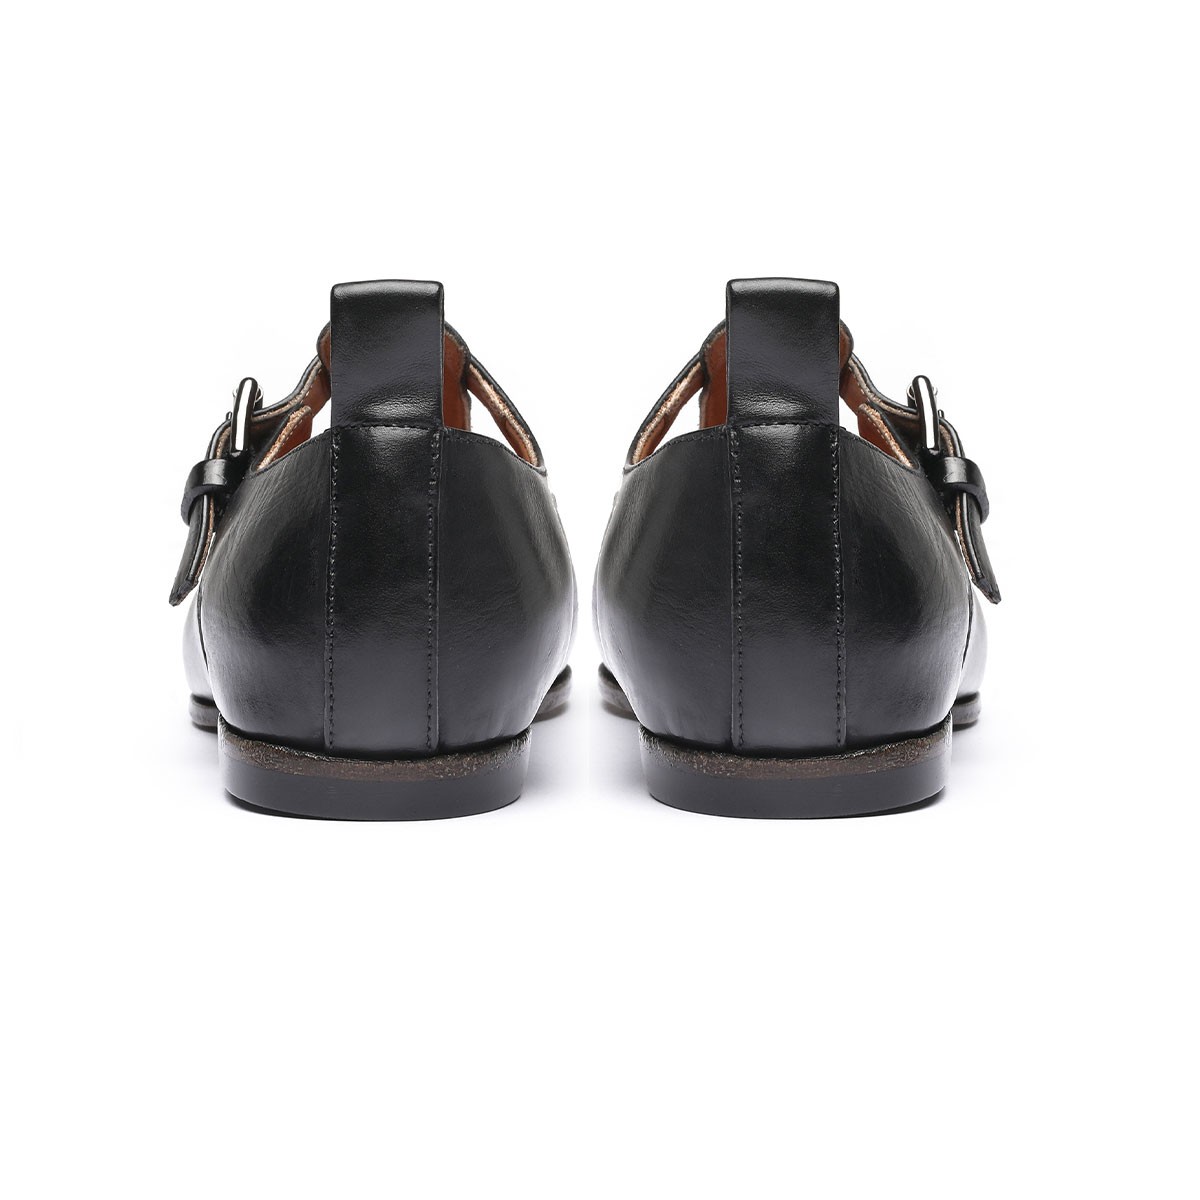 Black leather crab sandals